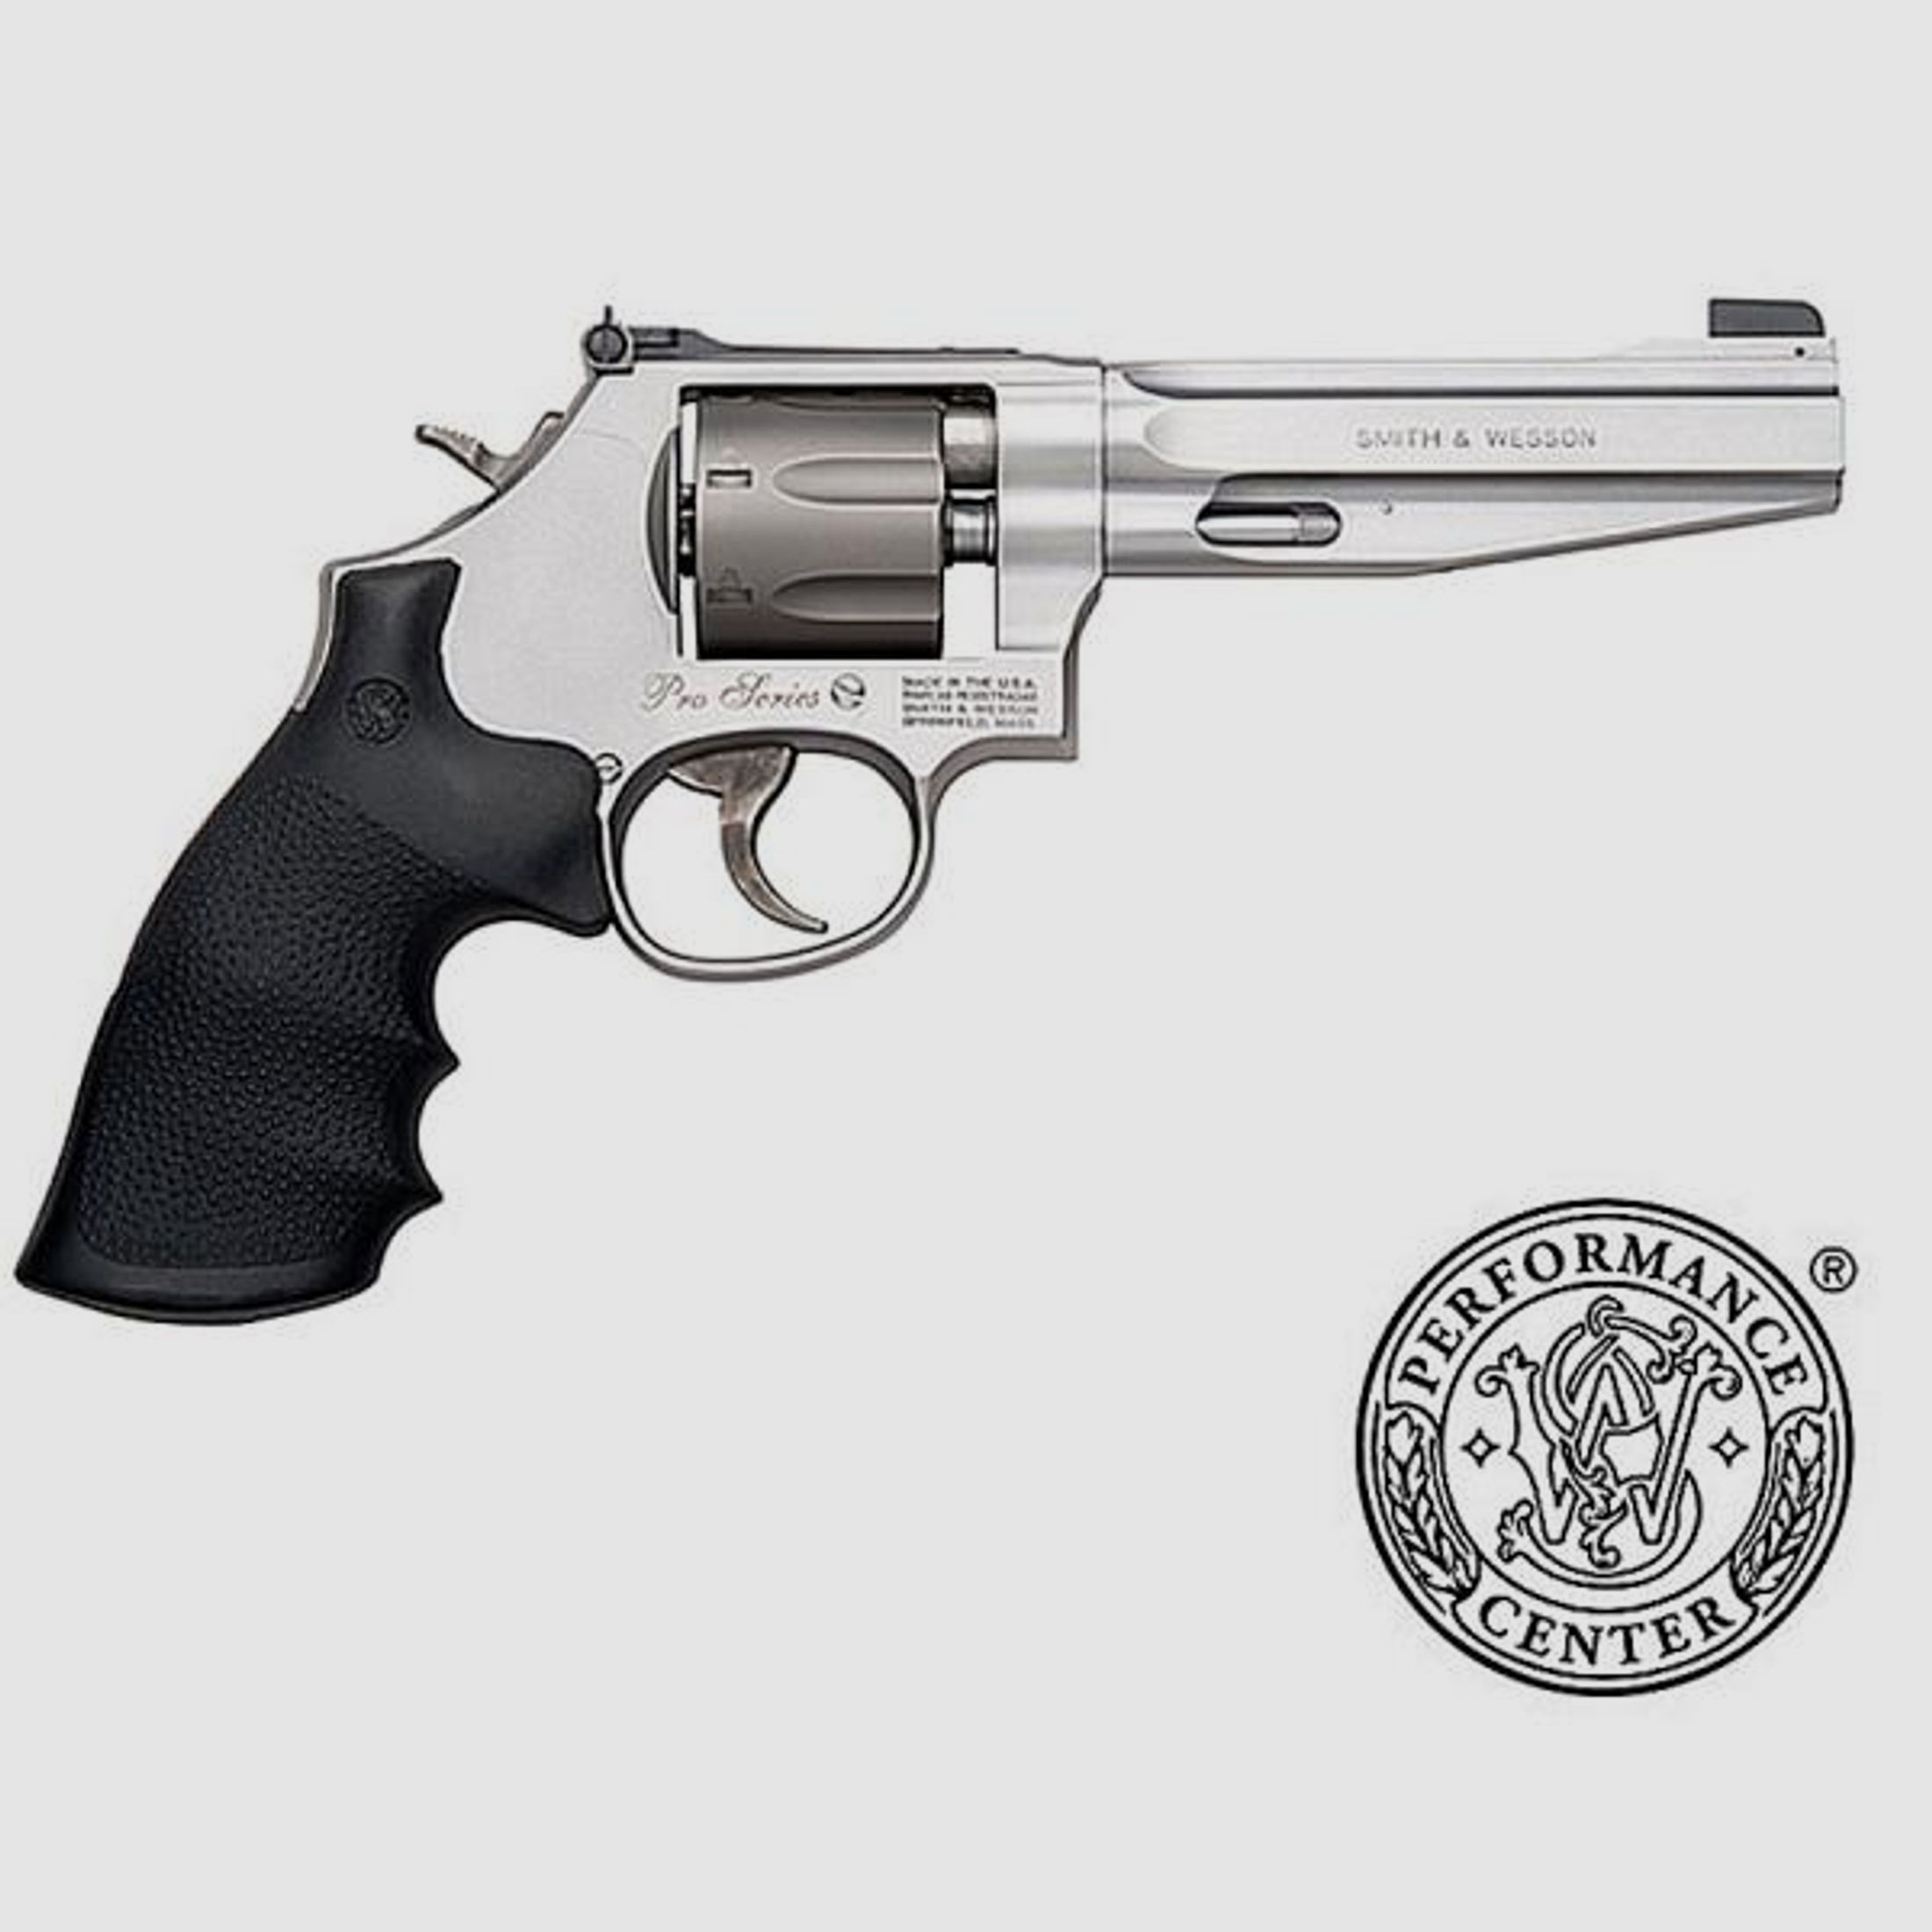 SMITH & WESSON Revolver Mod. 986 -5' Pro Series 9mmLuger